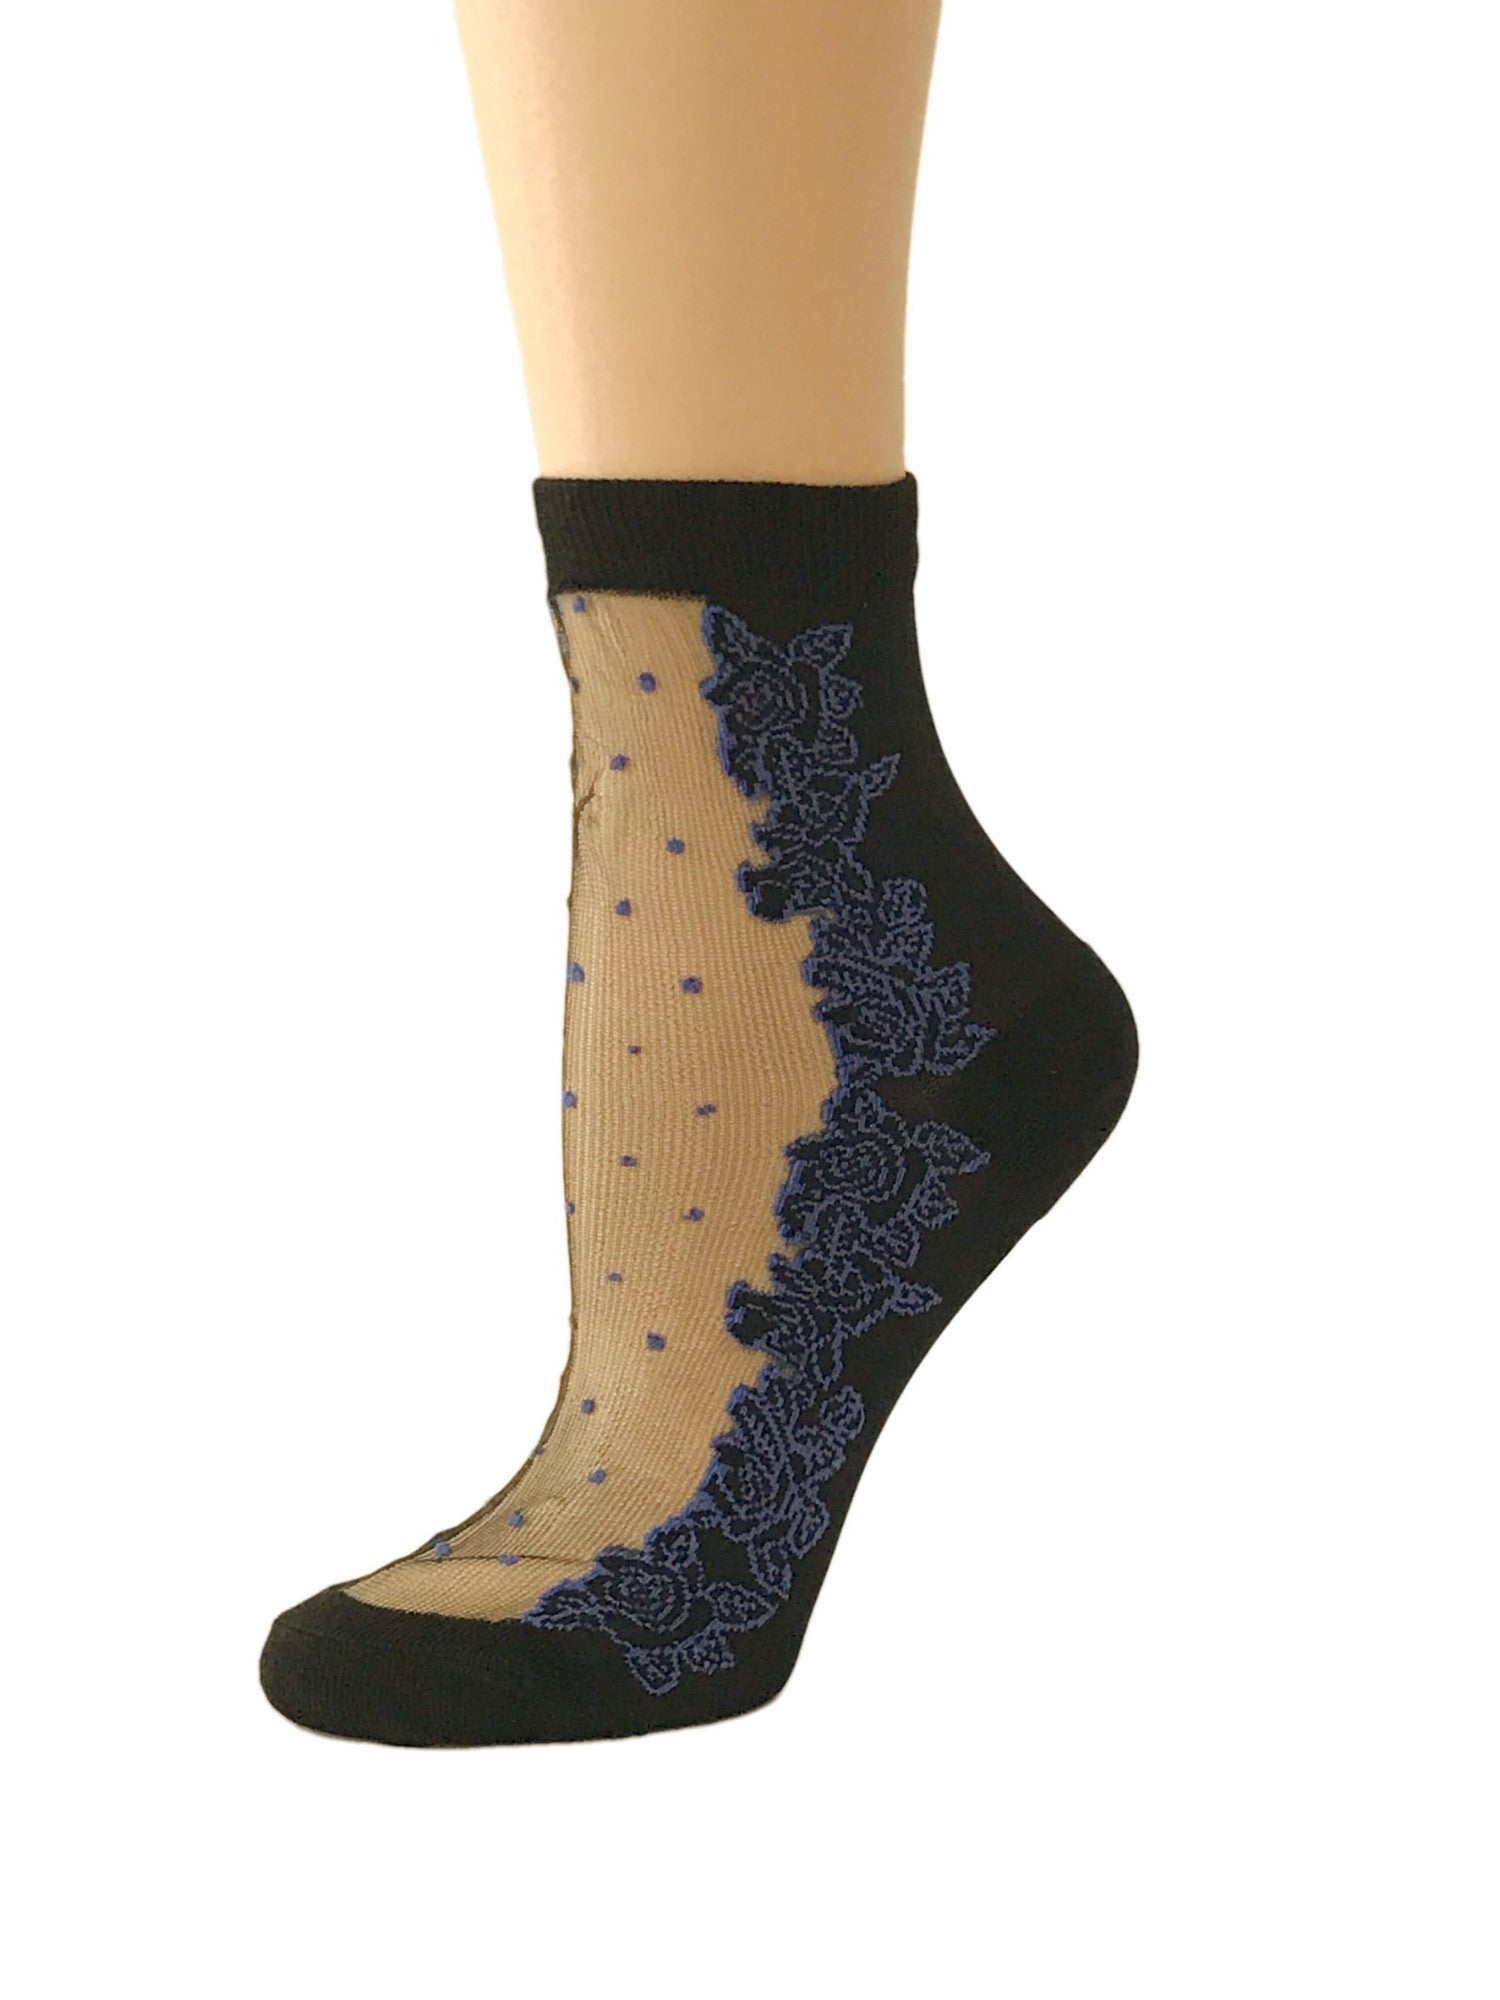 Dotted Blue Roses Sheer Socks - Global Trendz Fashion®